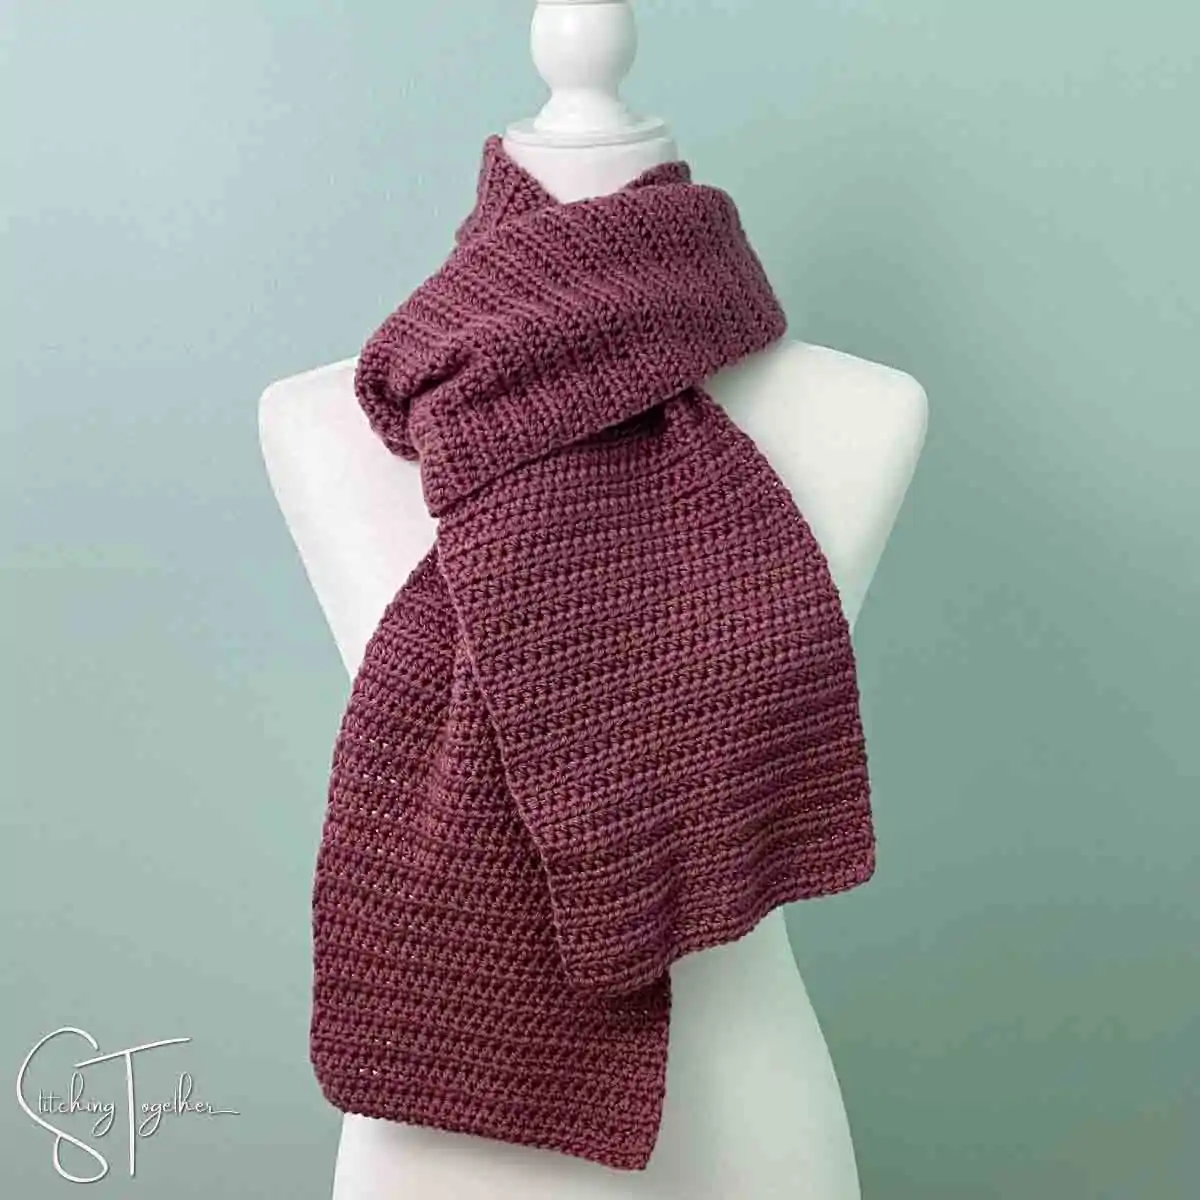 purple crochet scarf on a mannequin